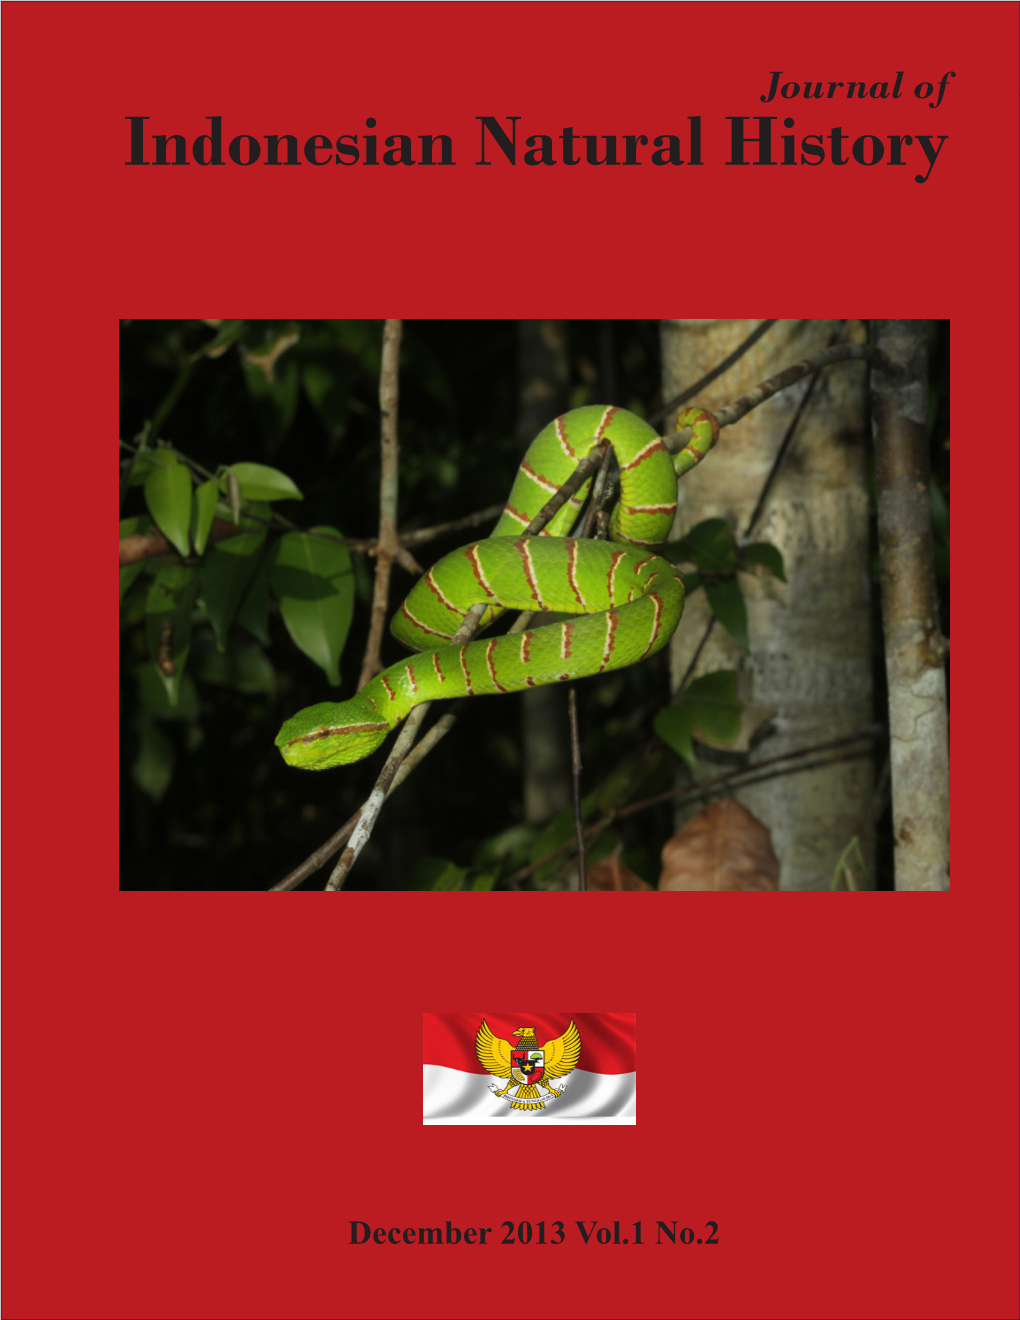 December 2013 Vol.1 No.2 Journal of Indonesian Natural History Editors Dr